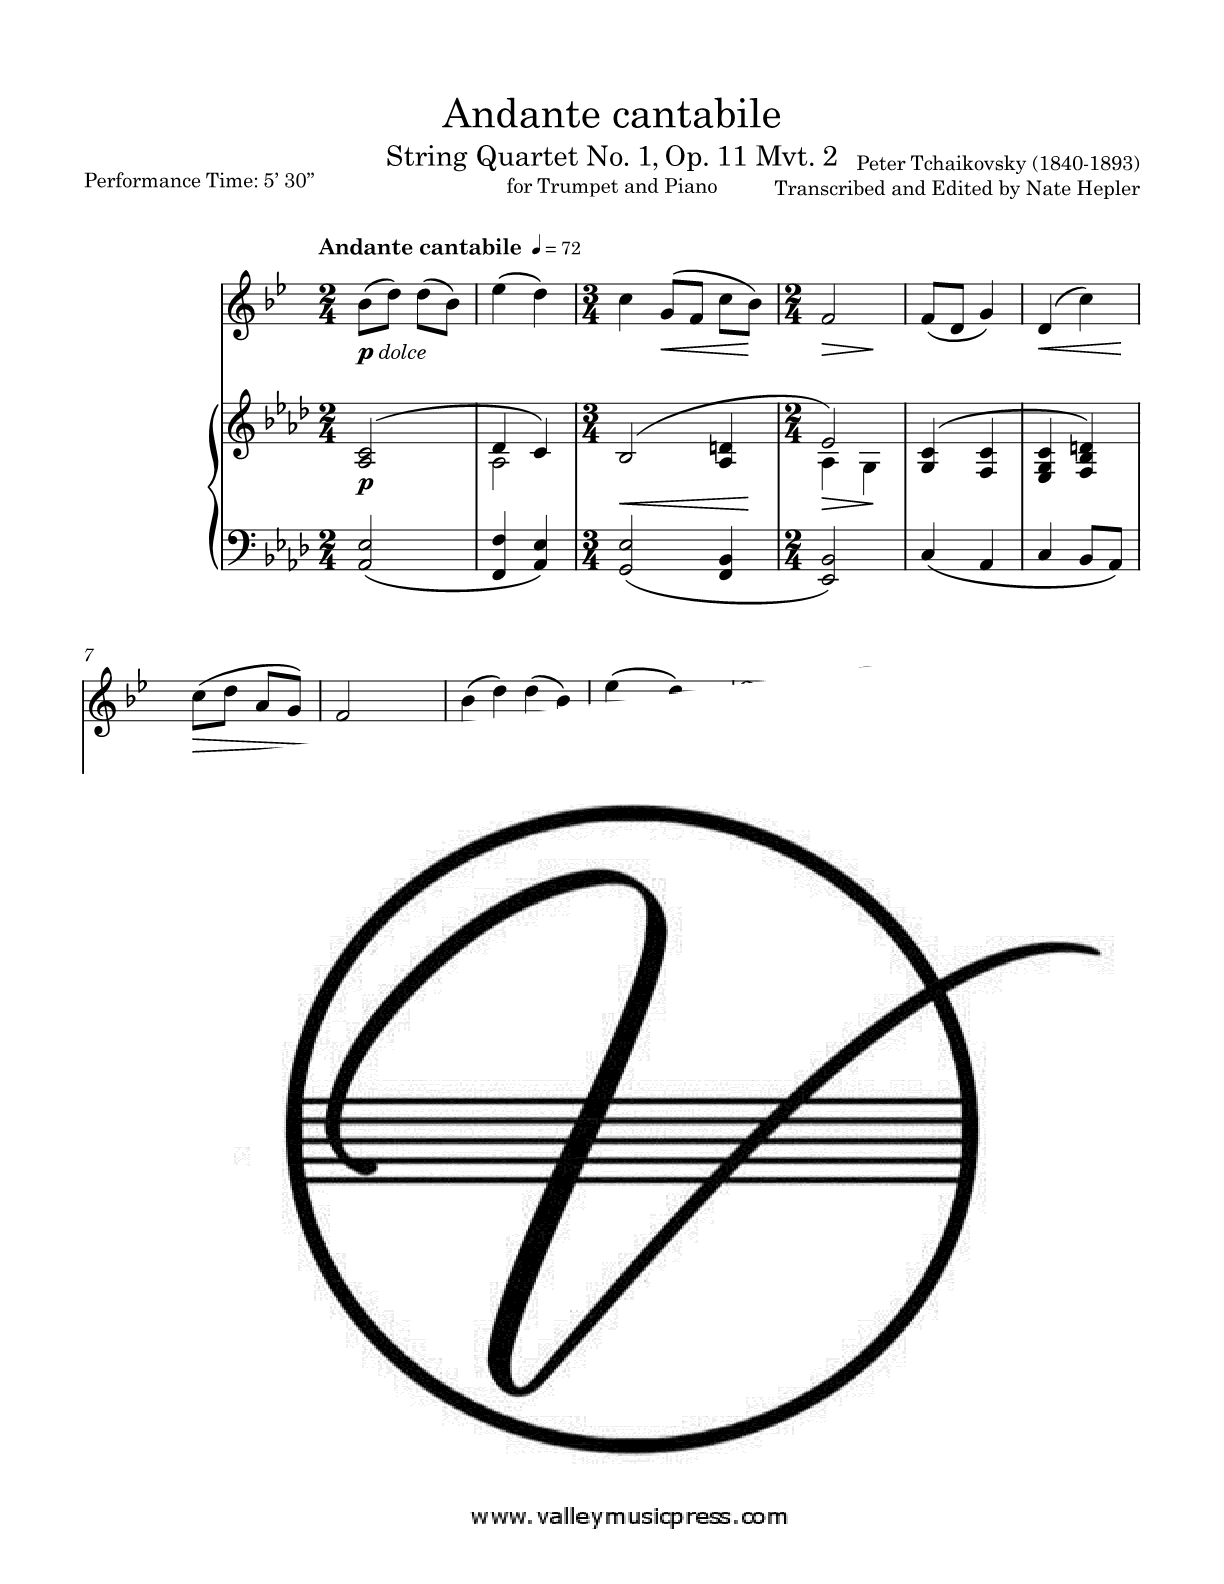 Tchaikovsky - Andante cantabile String Quartet N1 (Trp & Piano)